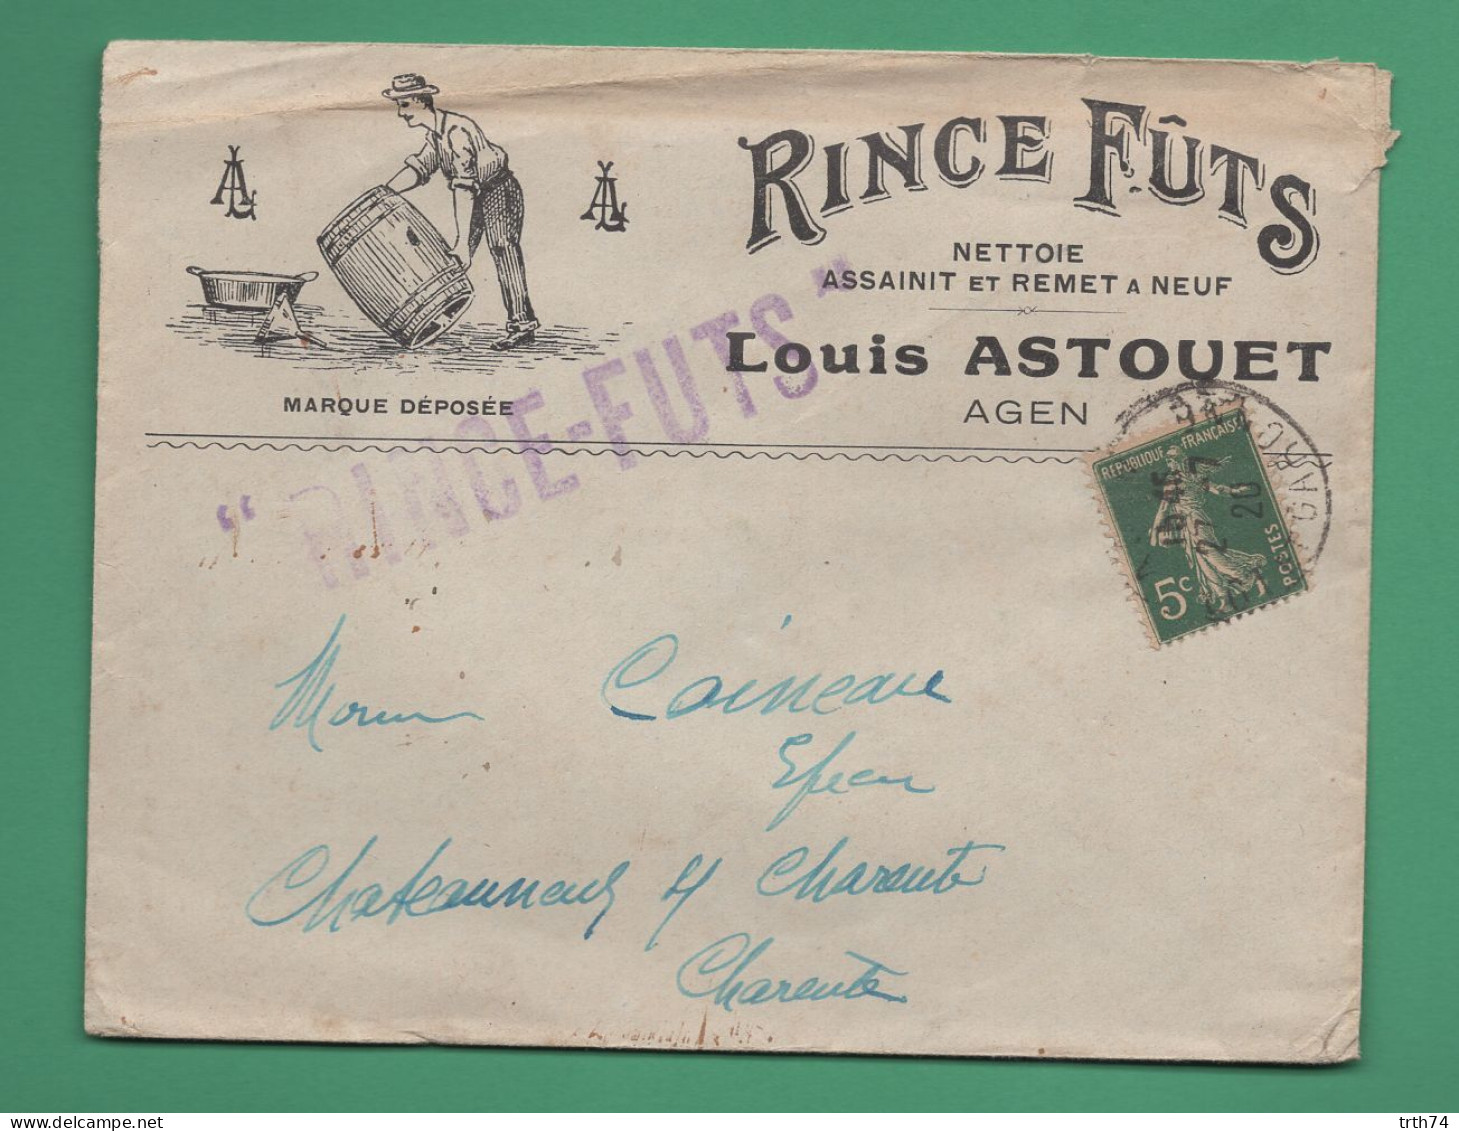 47 Agen Astouet Louis Rince Futs Nettoie Assainit ( Tonneau, Barrique ) Enveloppe Destination Châteauneuf Charente 1920 - Landwirtschaft